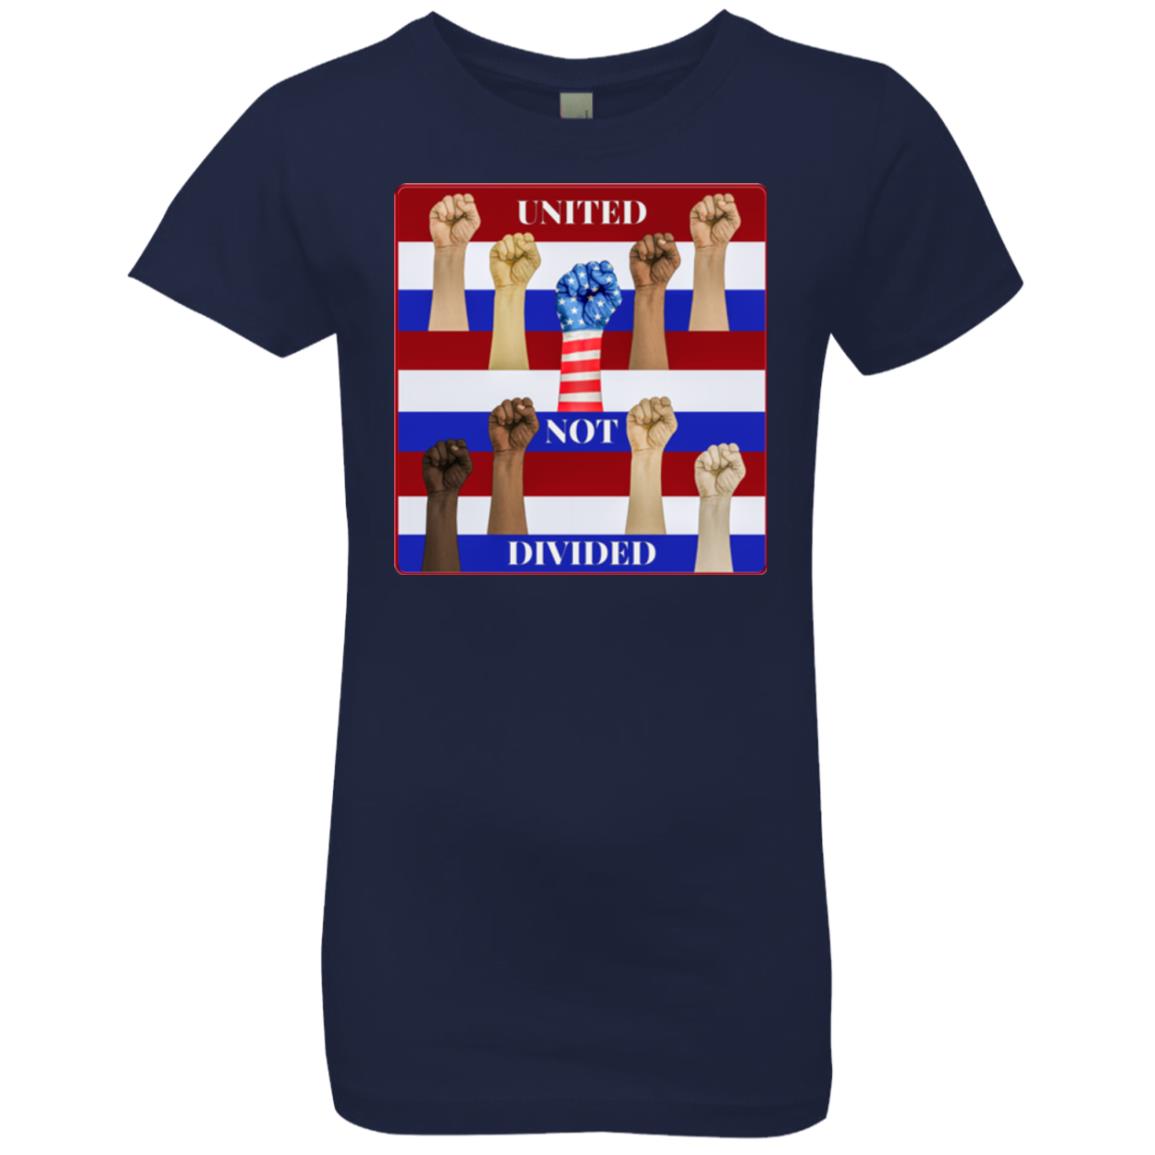 united not divided - Girl's Premium Cotton T-Shirt